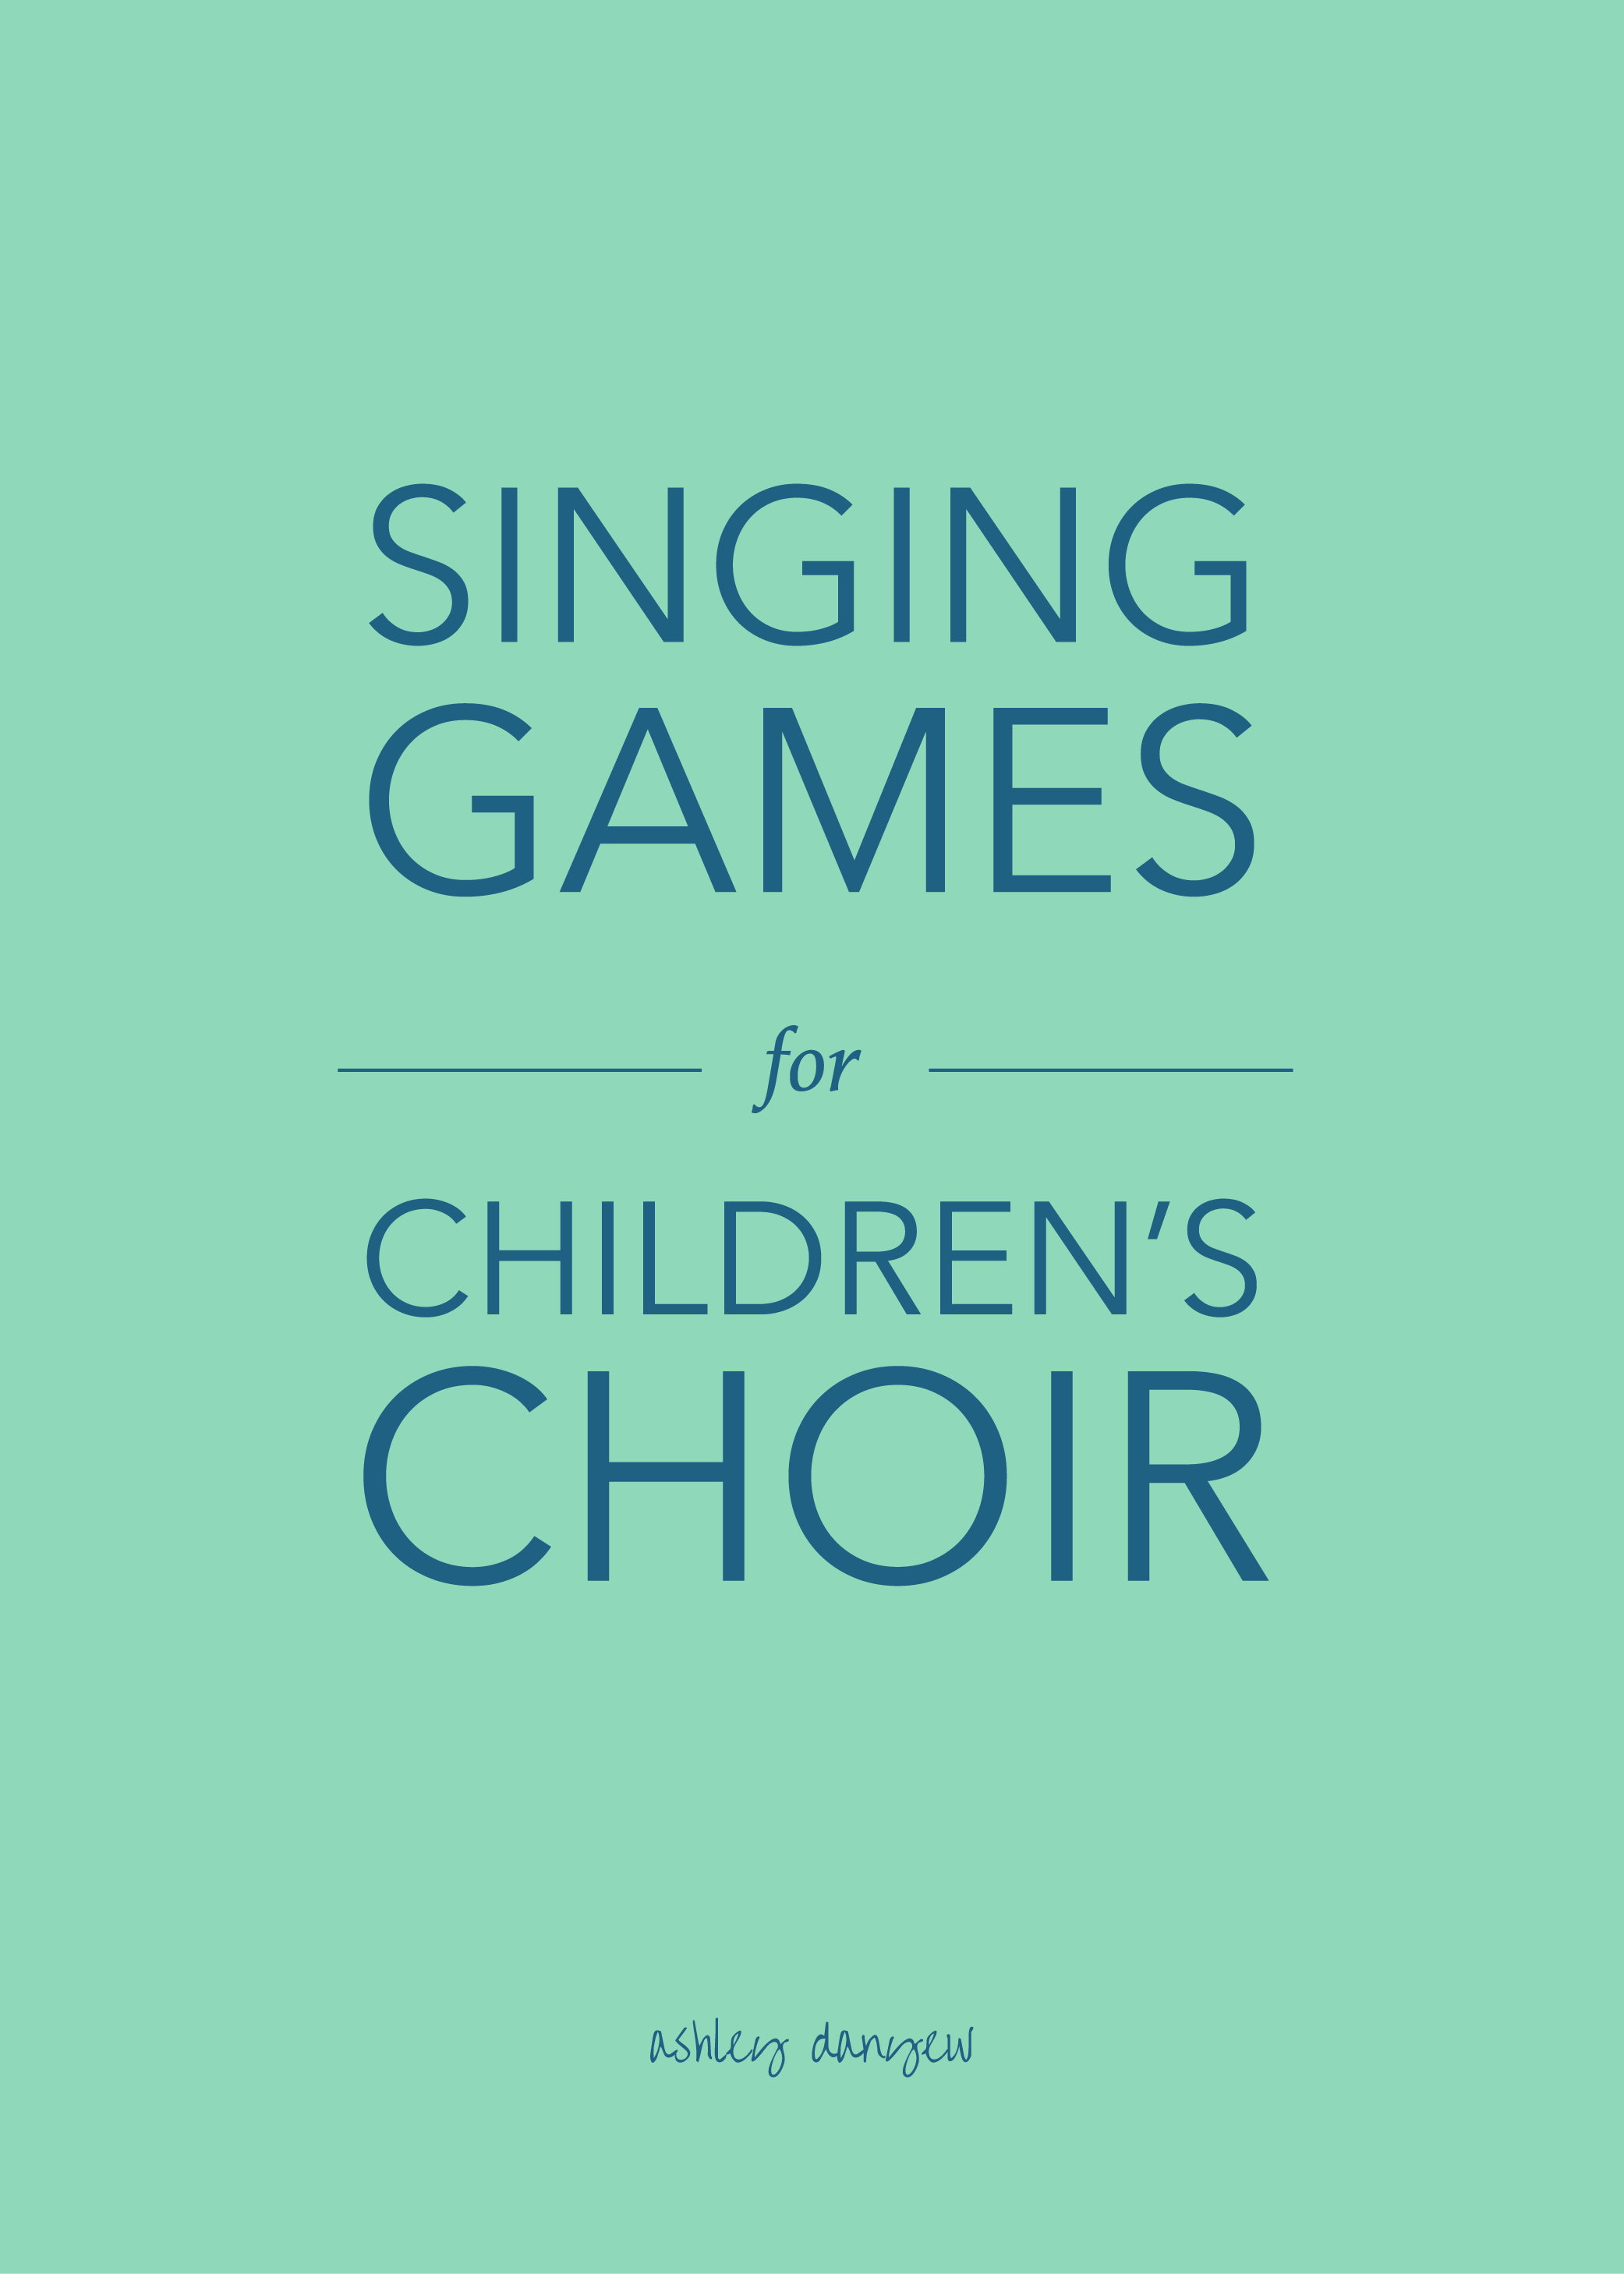 15 Singing Games for Children's Choir